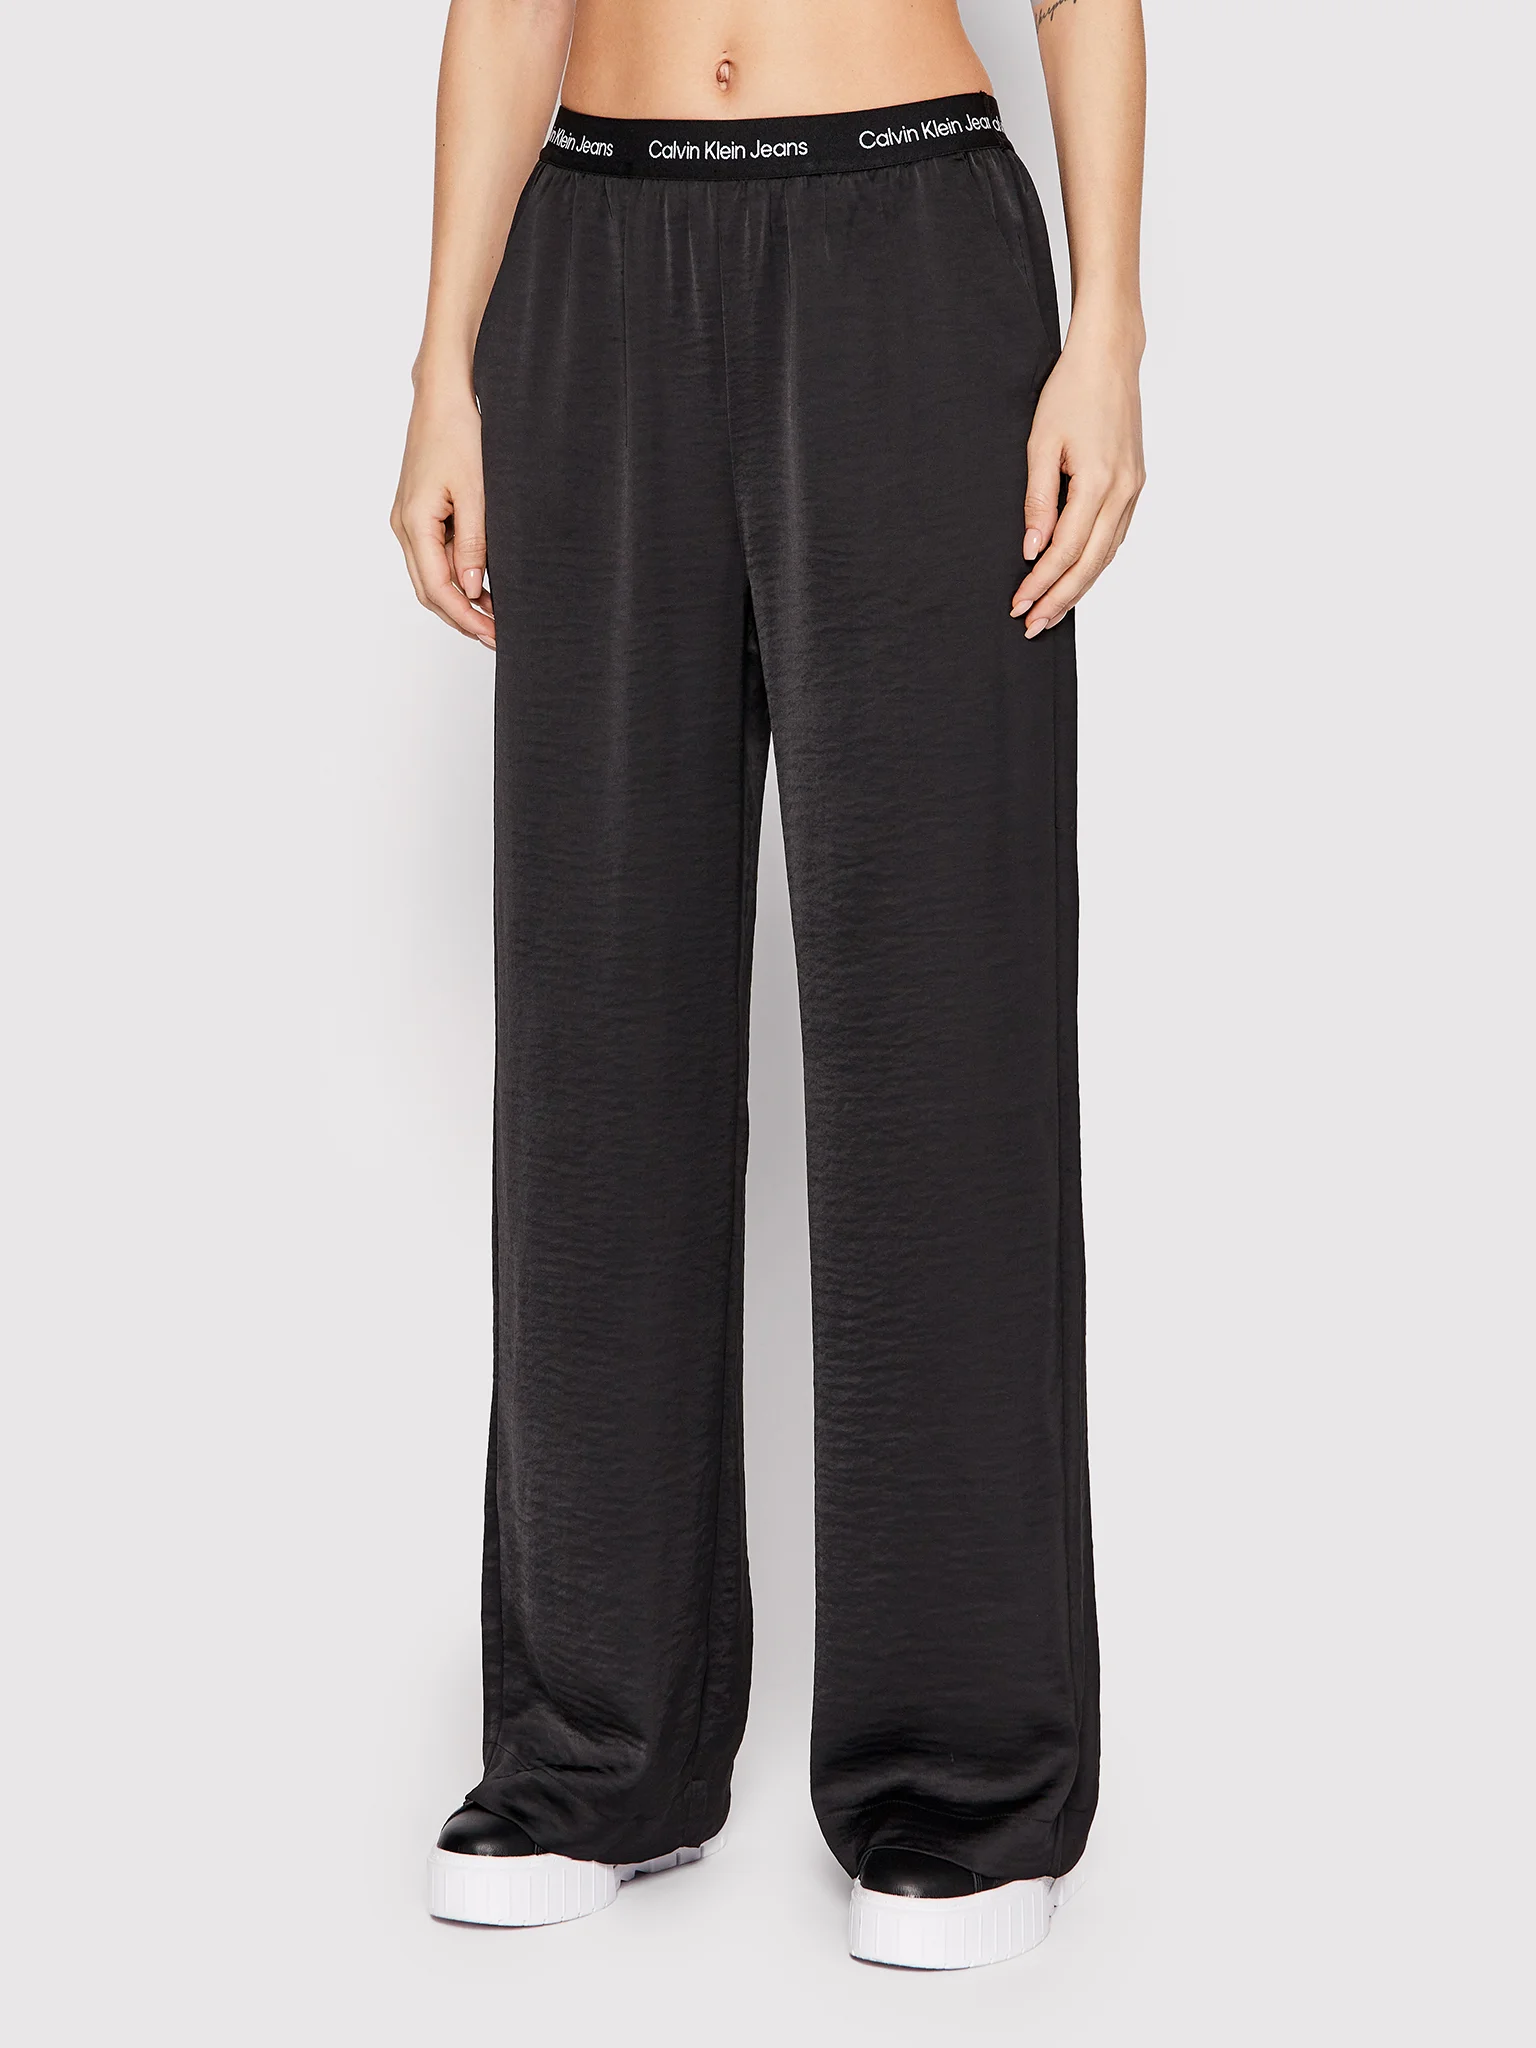 Calvin Klein Jeans - logo waistband wide leg pants relaxed fit - women -  dstore online | Sommerröcke